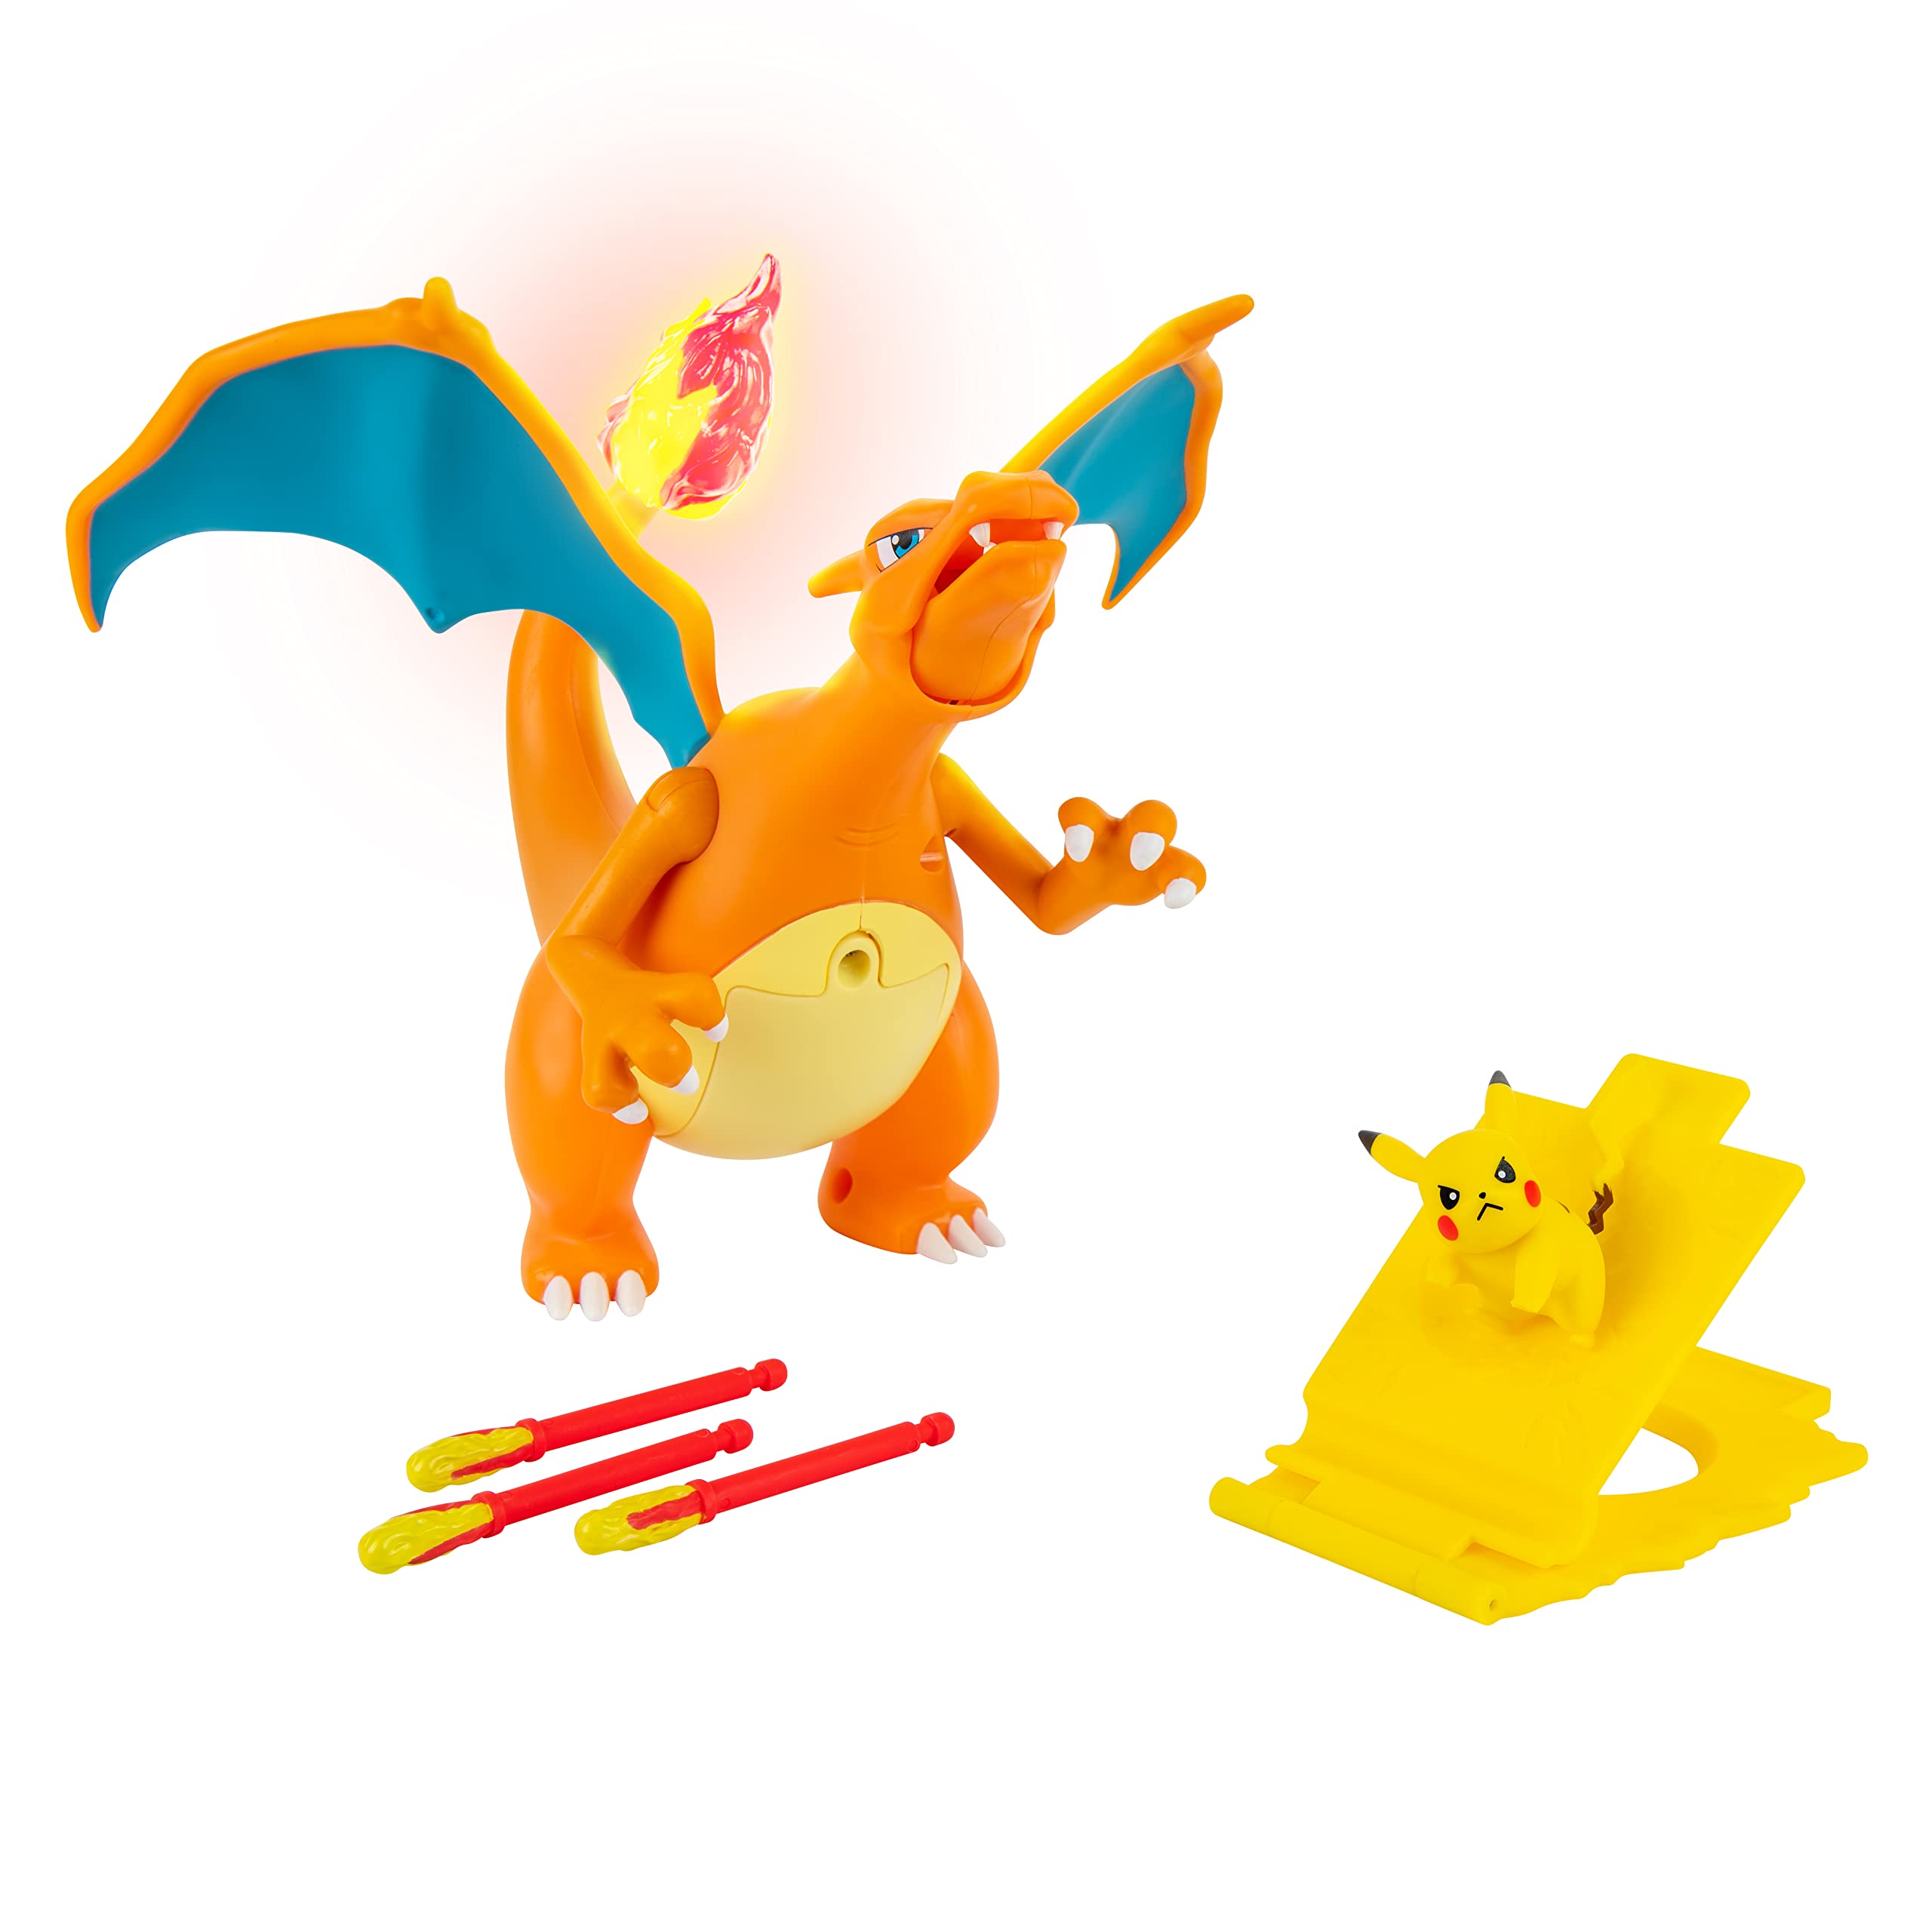 7" Pokemon Charizard Deluxe Feature Interactive Figure w/ 2" Pikachu Figure & Launcher - $14.50 - Amazon